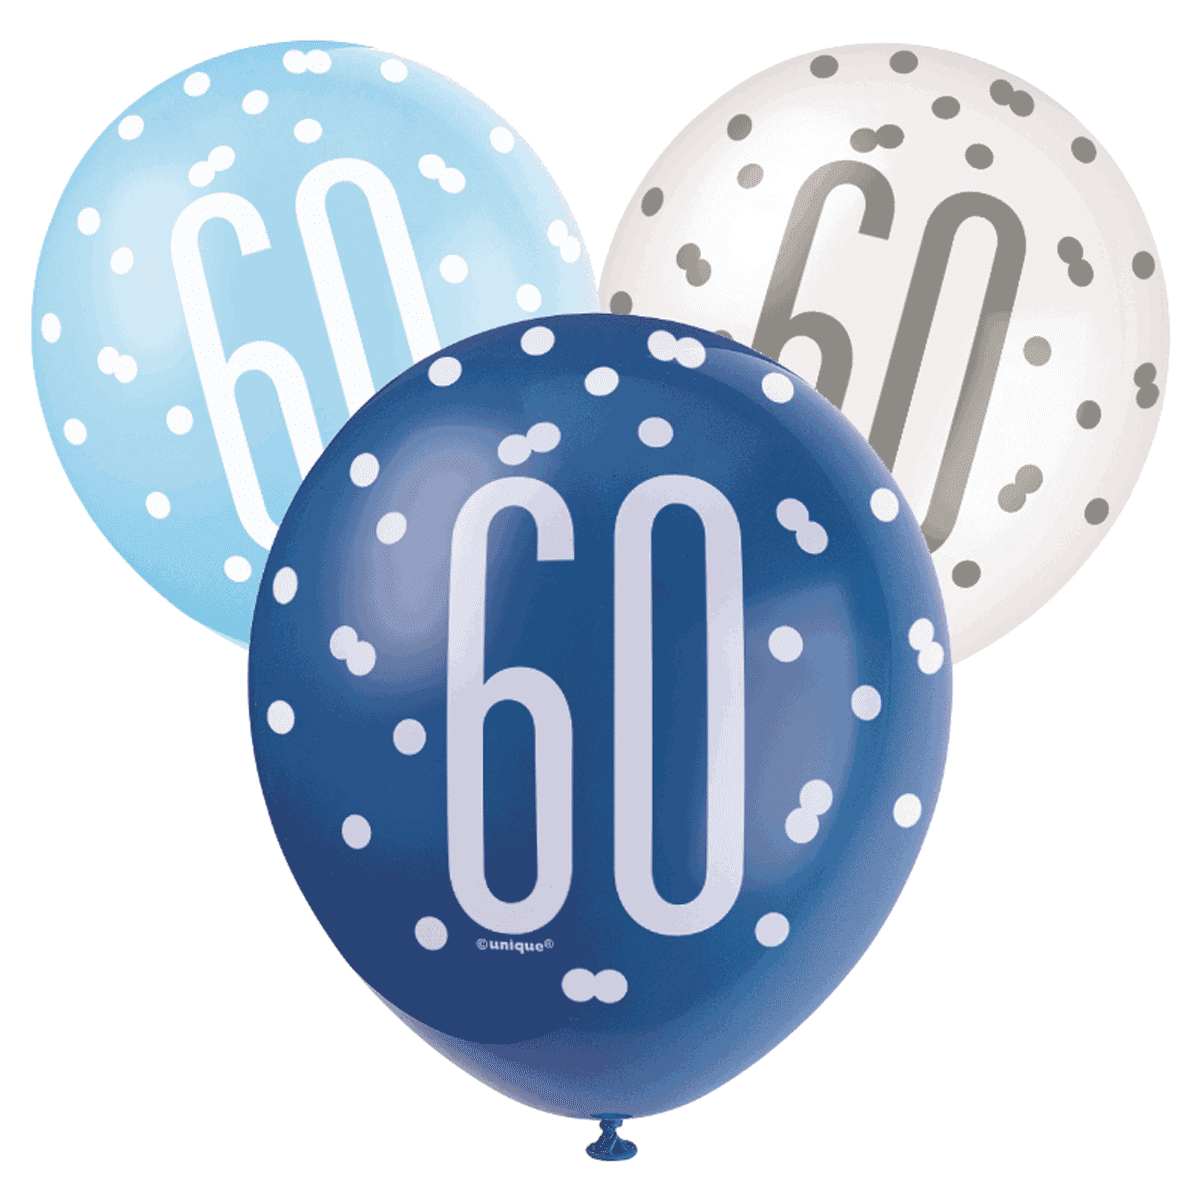 Blue, Silver, & White Latex Balloons 60th